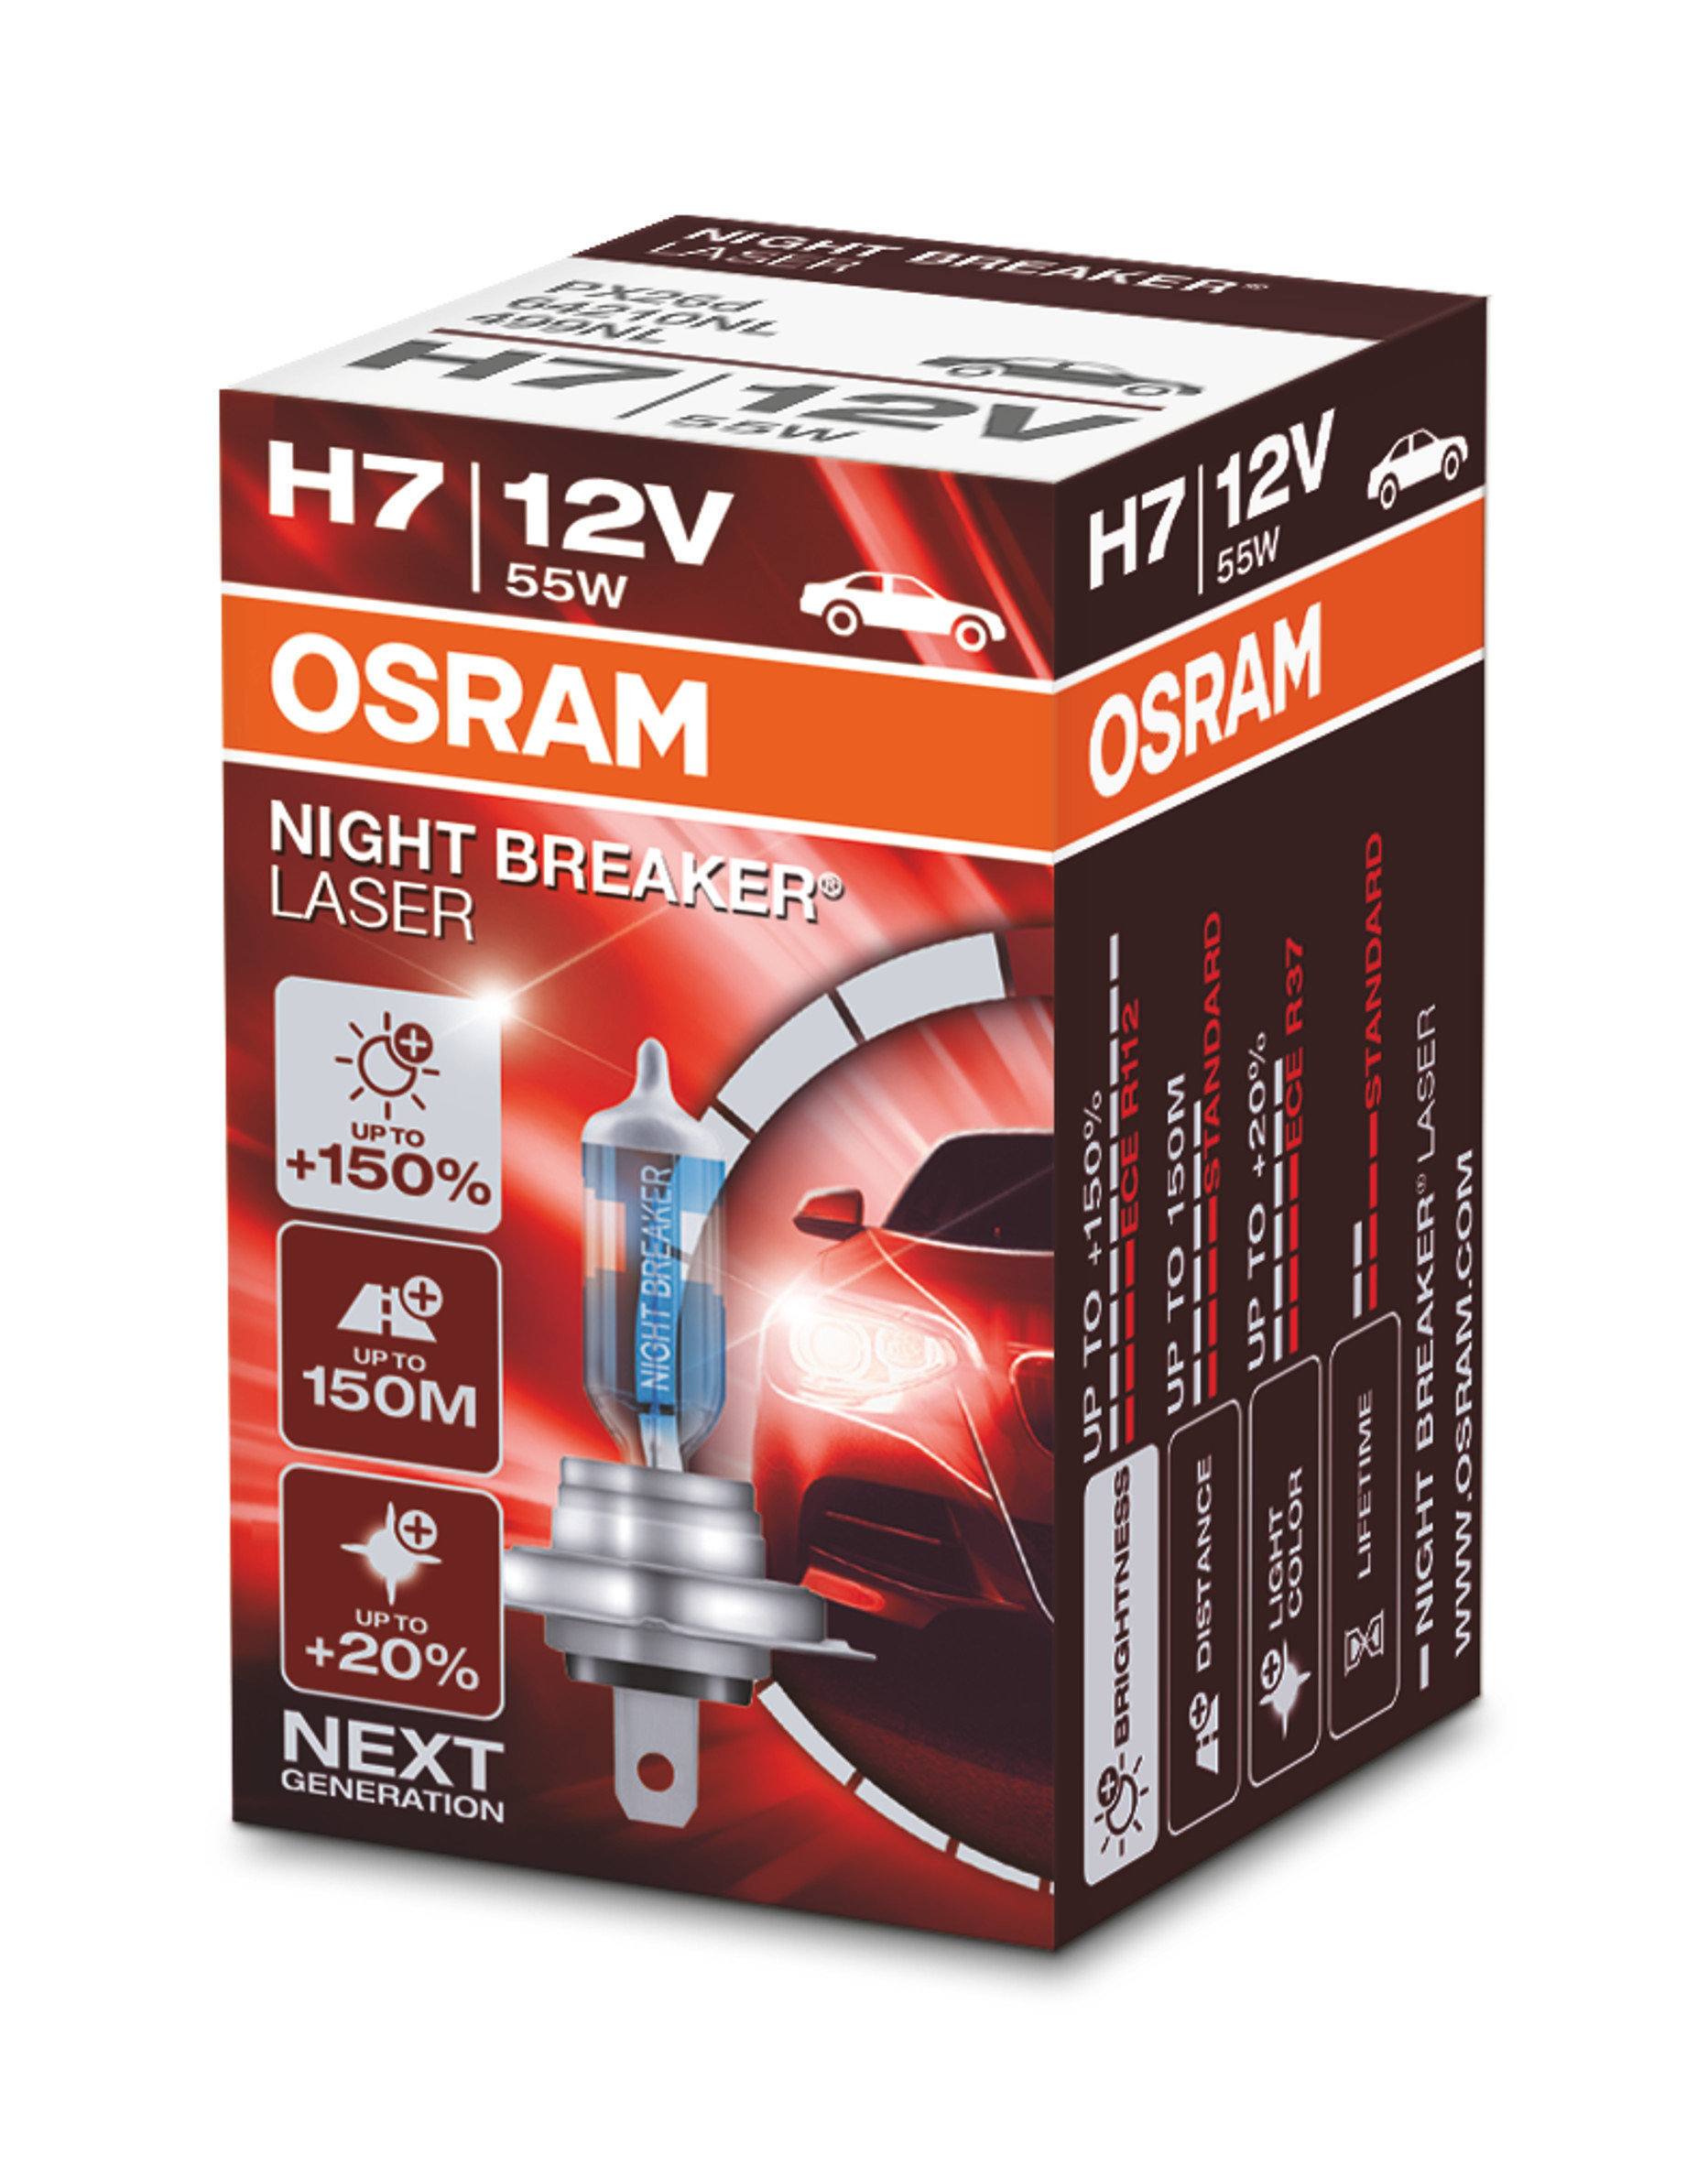 Osram Night Breaker H7 +150% More Brightness Headlight Bulbs Twin